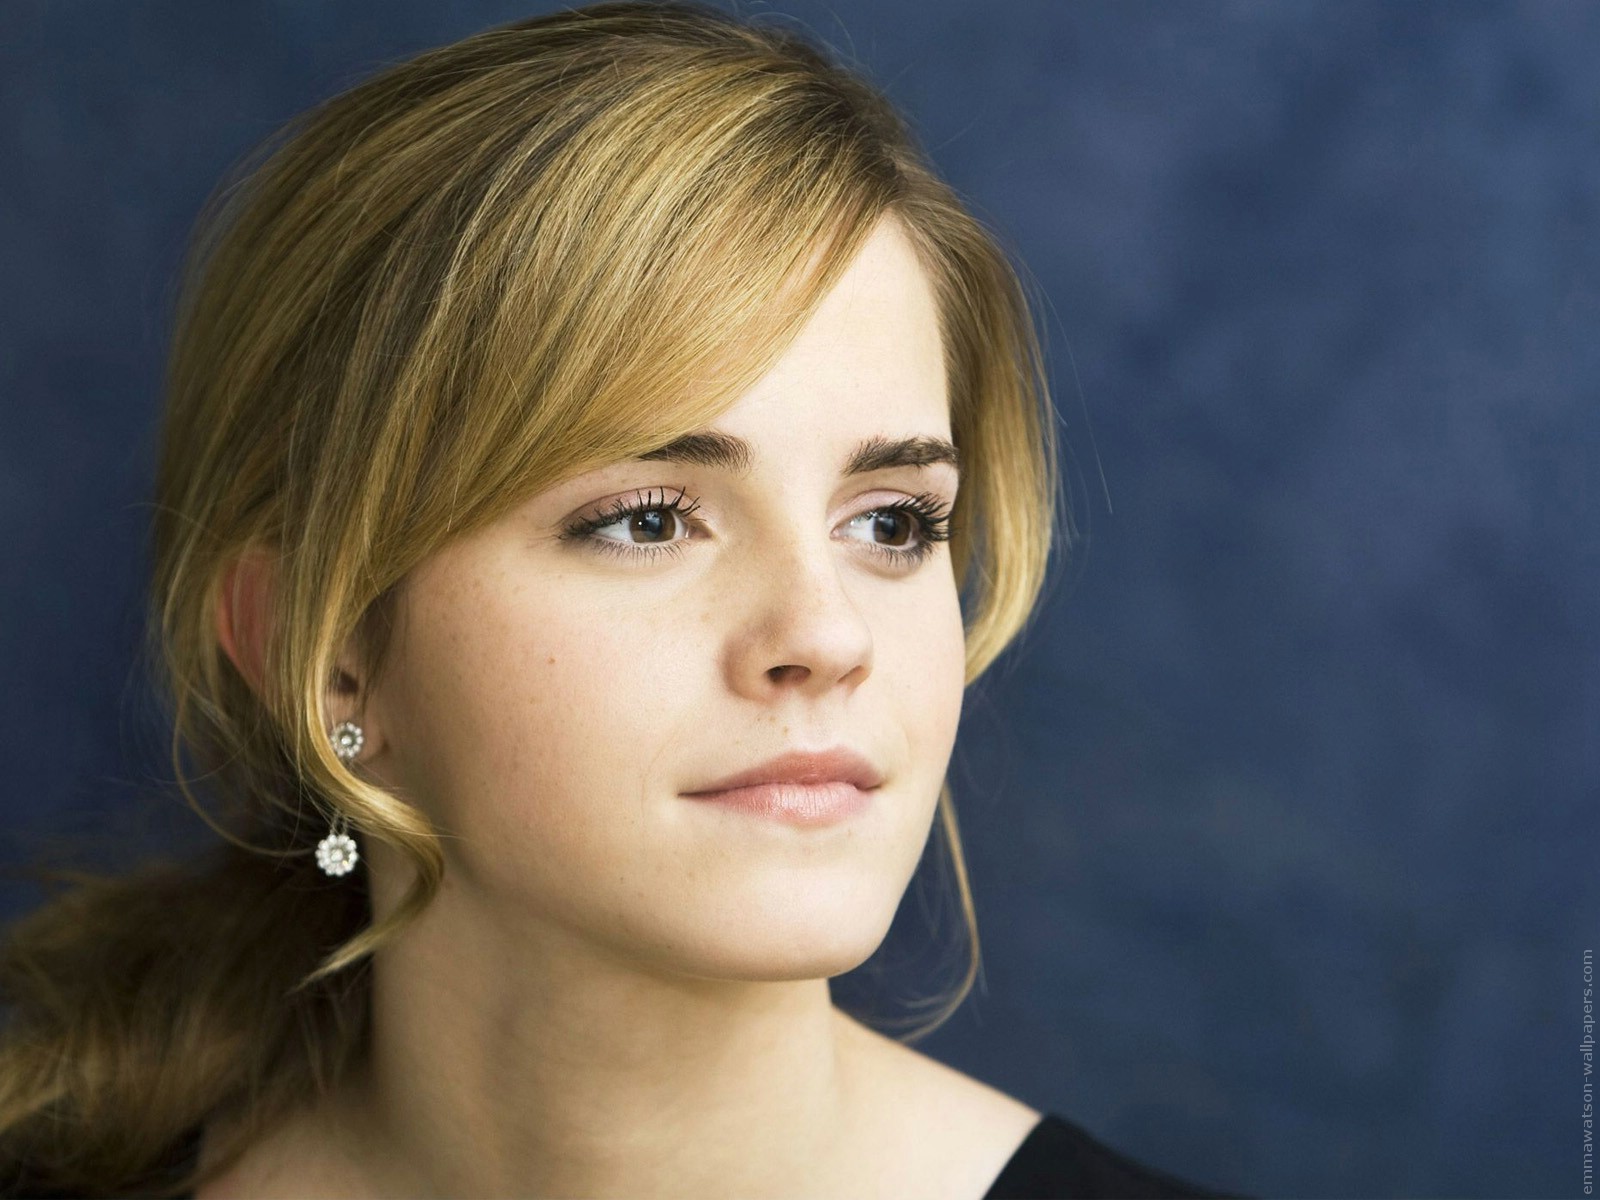 Emma Watson - Images Gallery